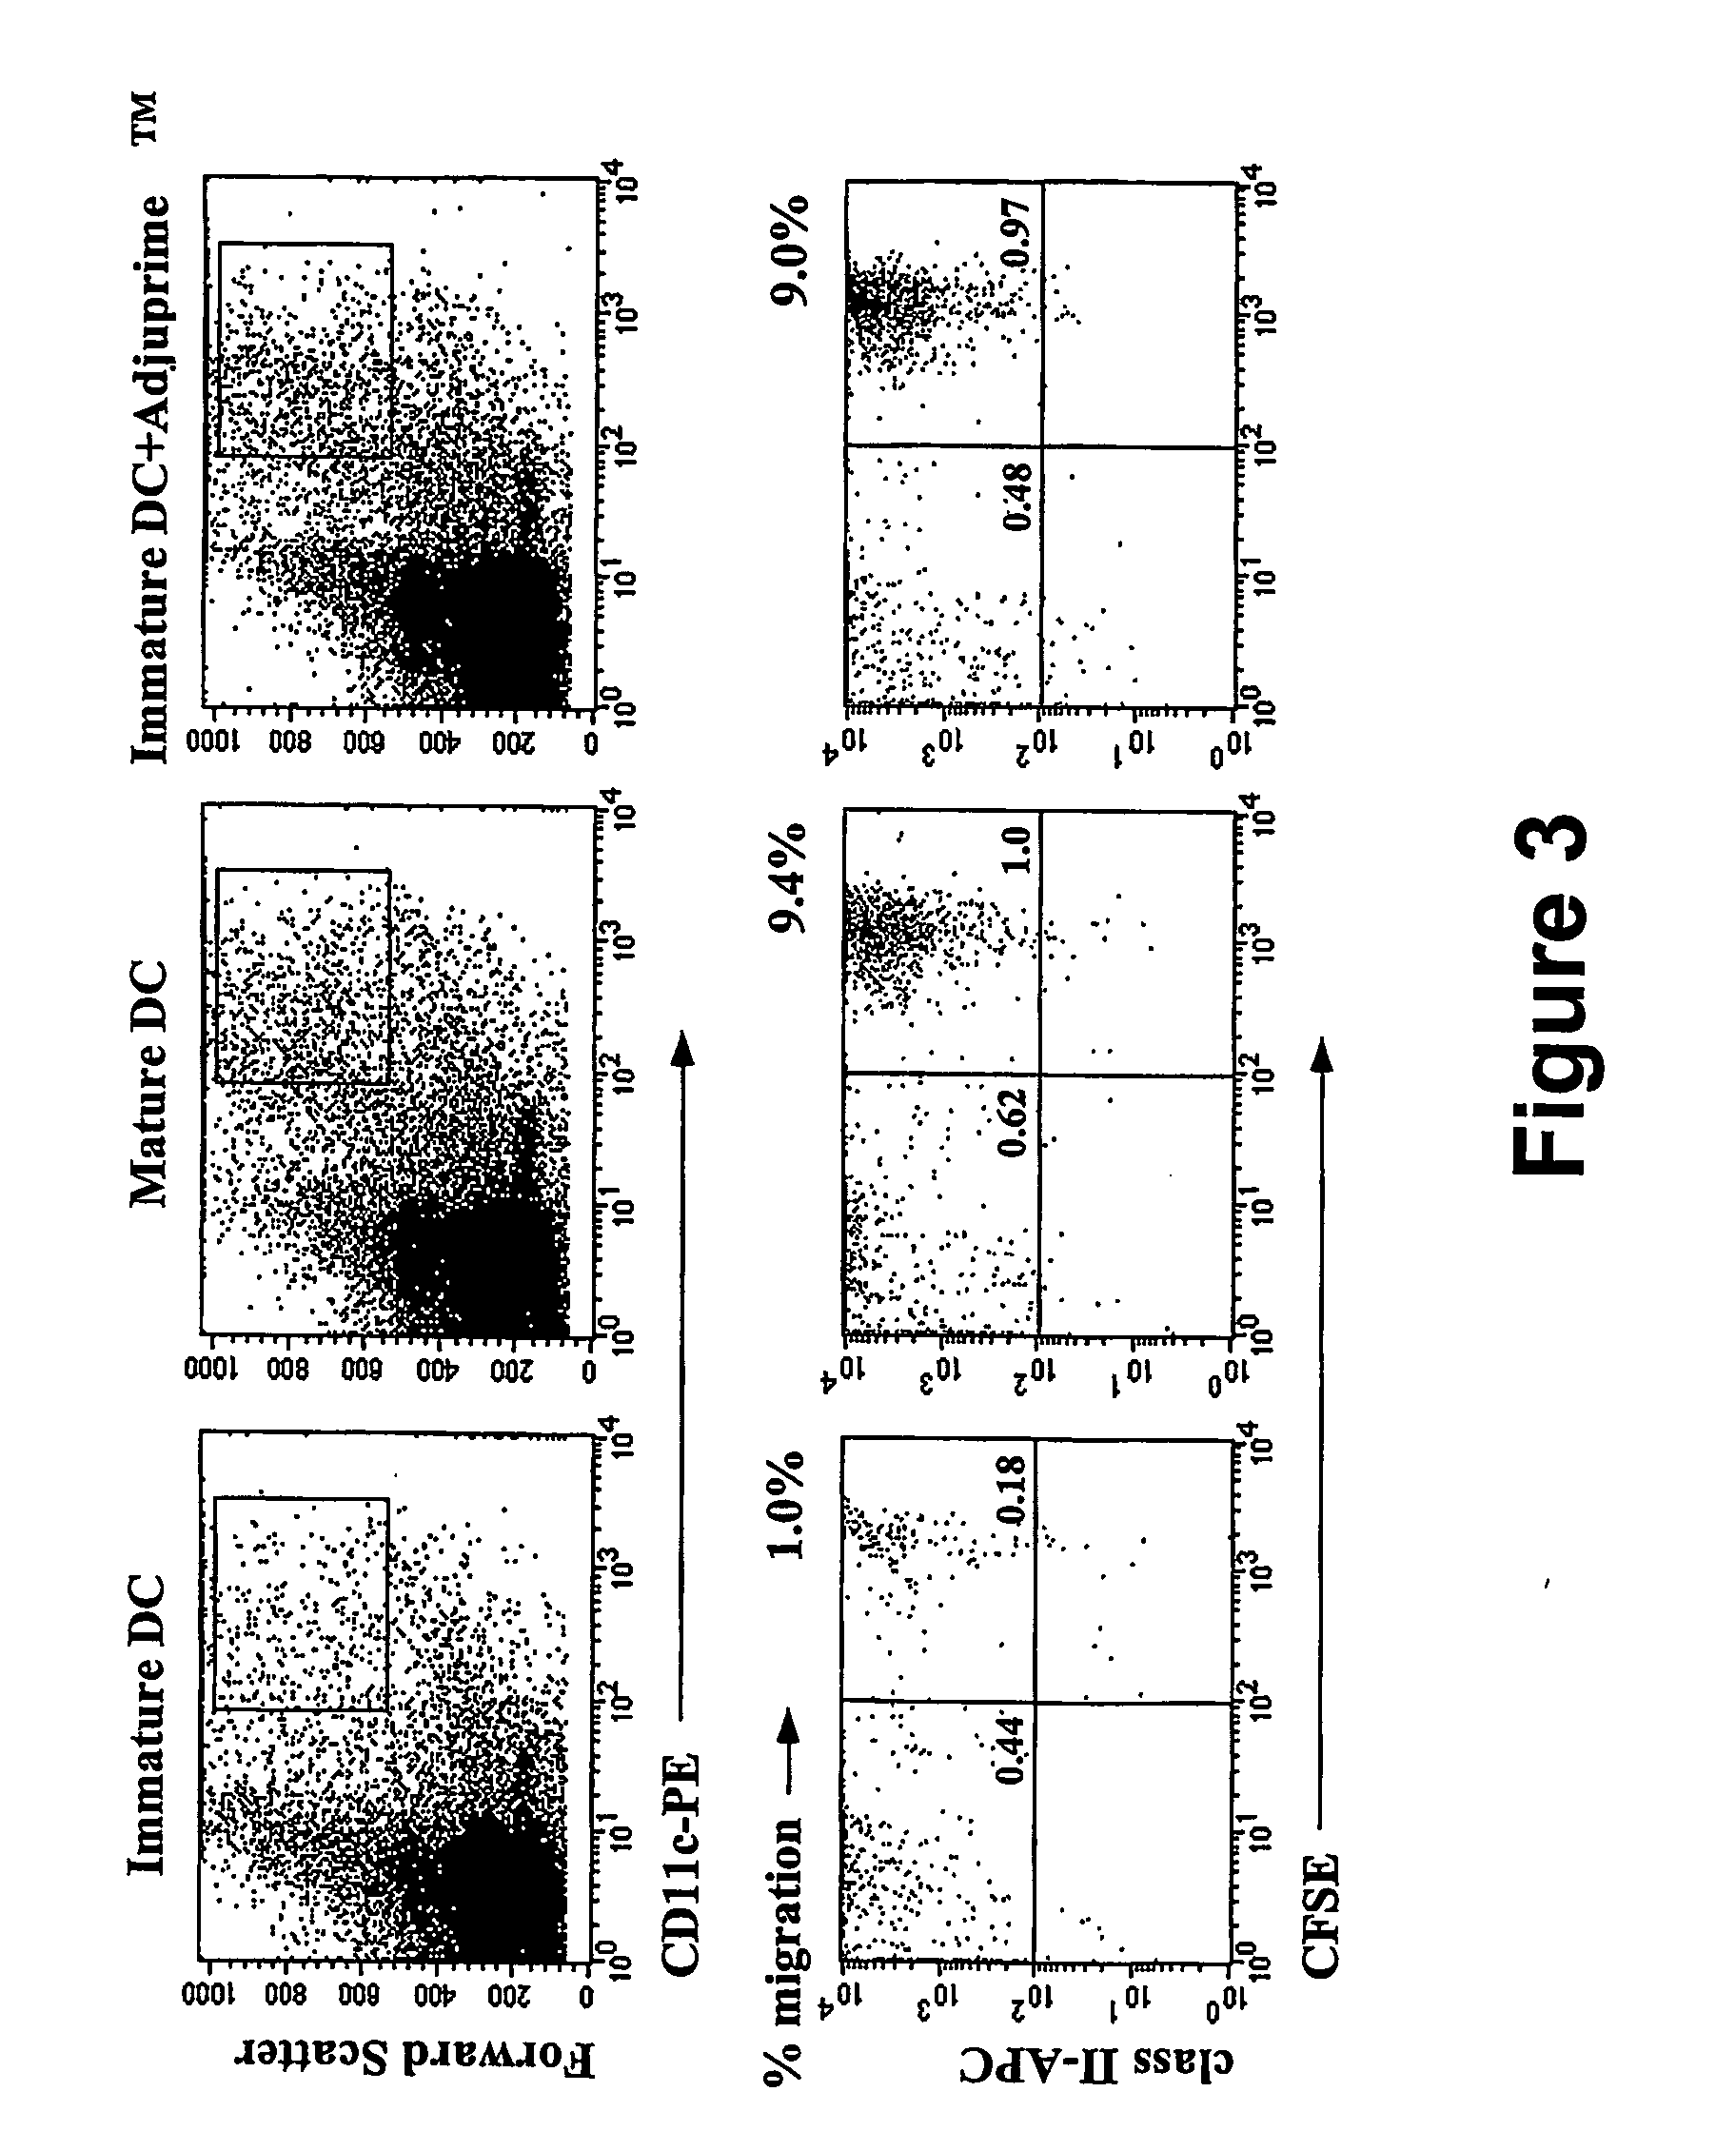 In situ maturation of dendritic cells